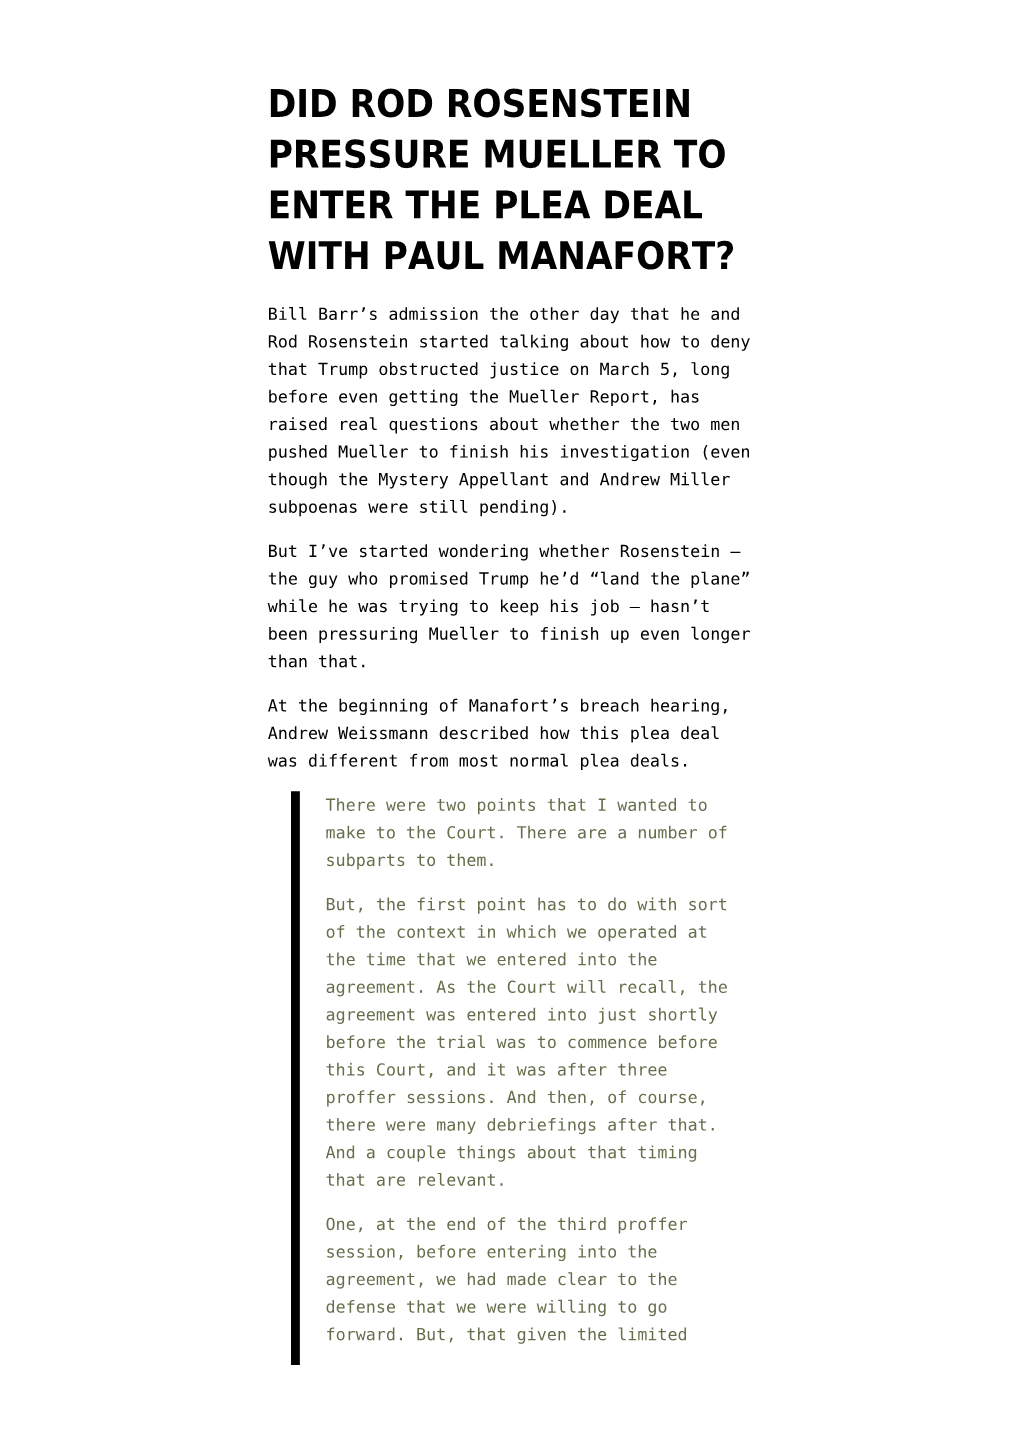 Did Rod Rosenstein Pressure Mueller to Enter the Plea Deal with Paul Manafort?